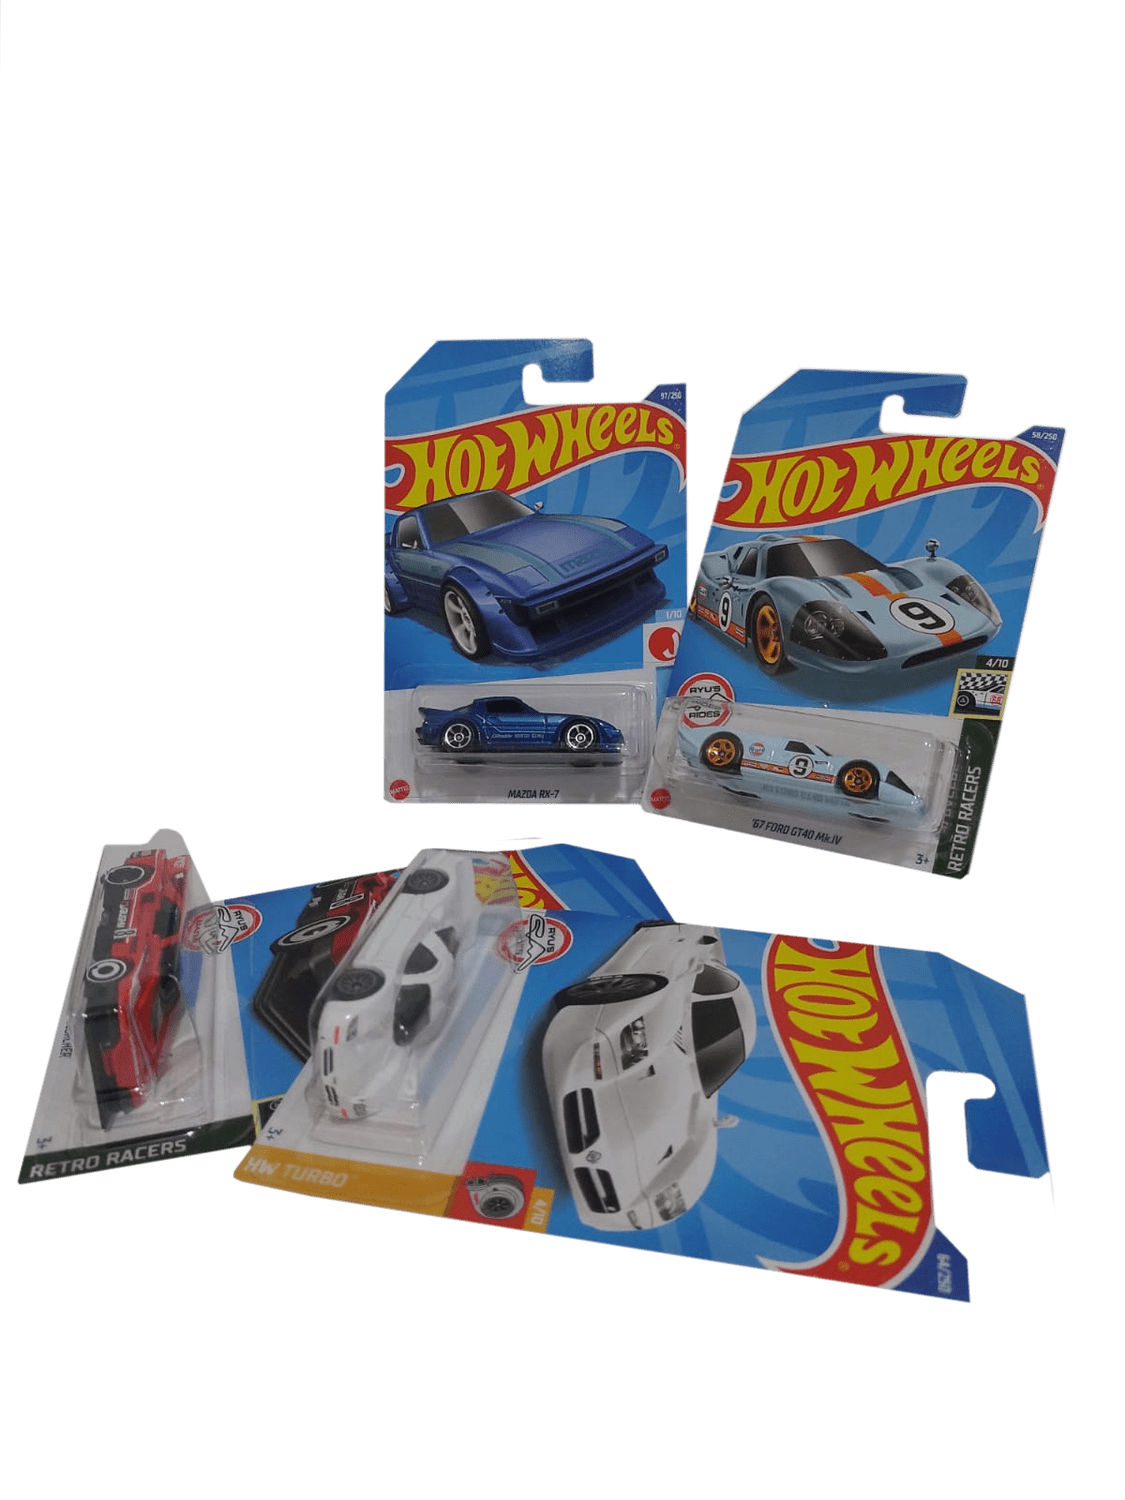 5 Carrinhos Hot Wheels Original Colecionar Mattel Corrida